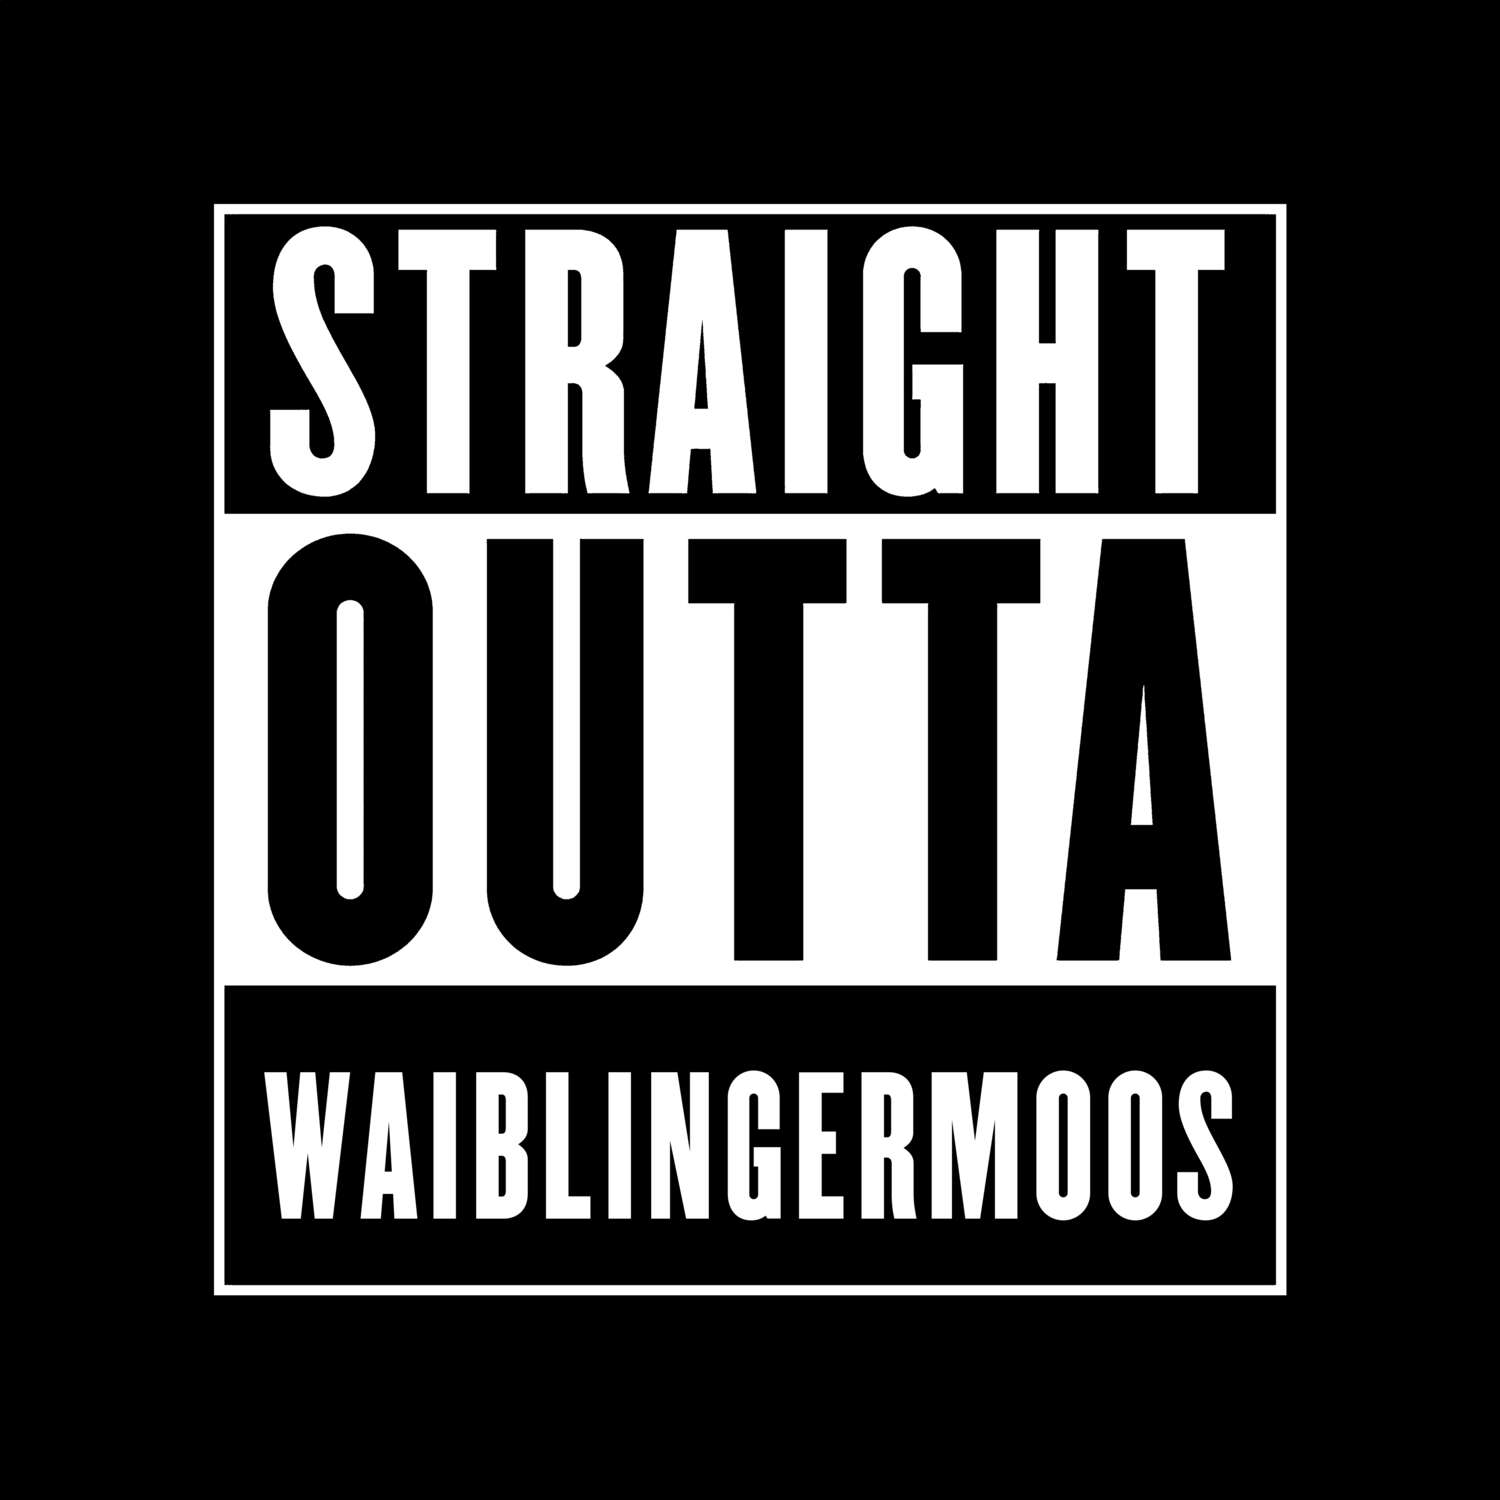 Waiblingermoos T-Shirt »Straight Outta«